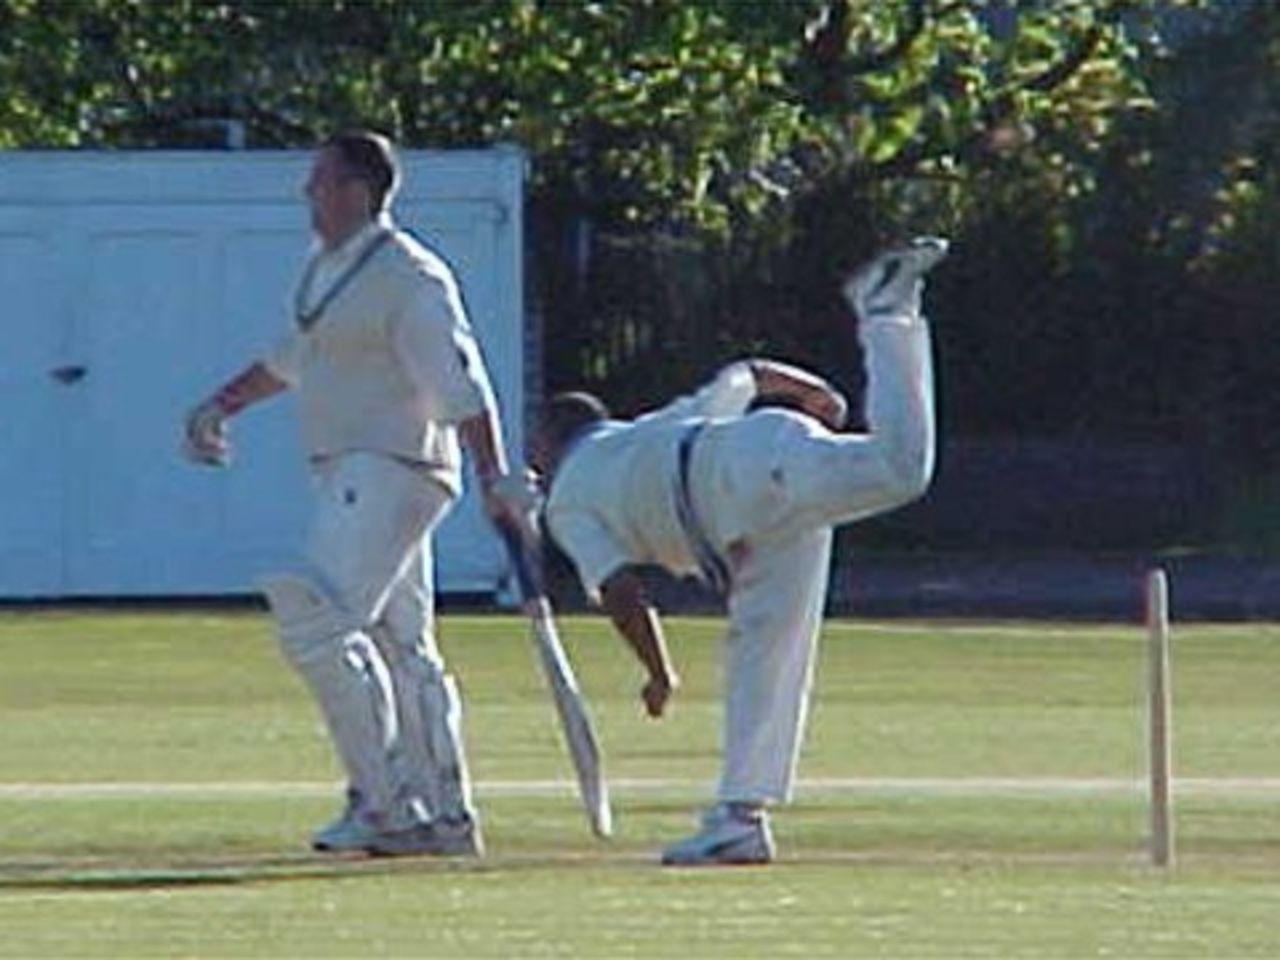 Paul Adams in action for Rishton in 2002 - no 1